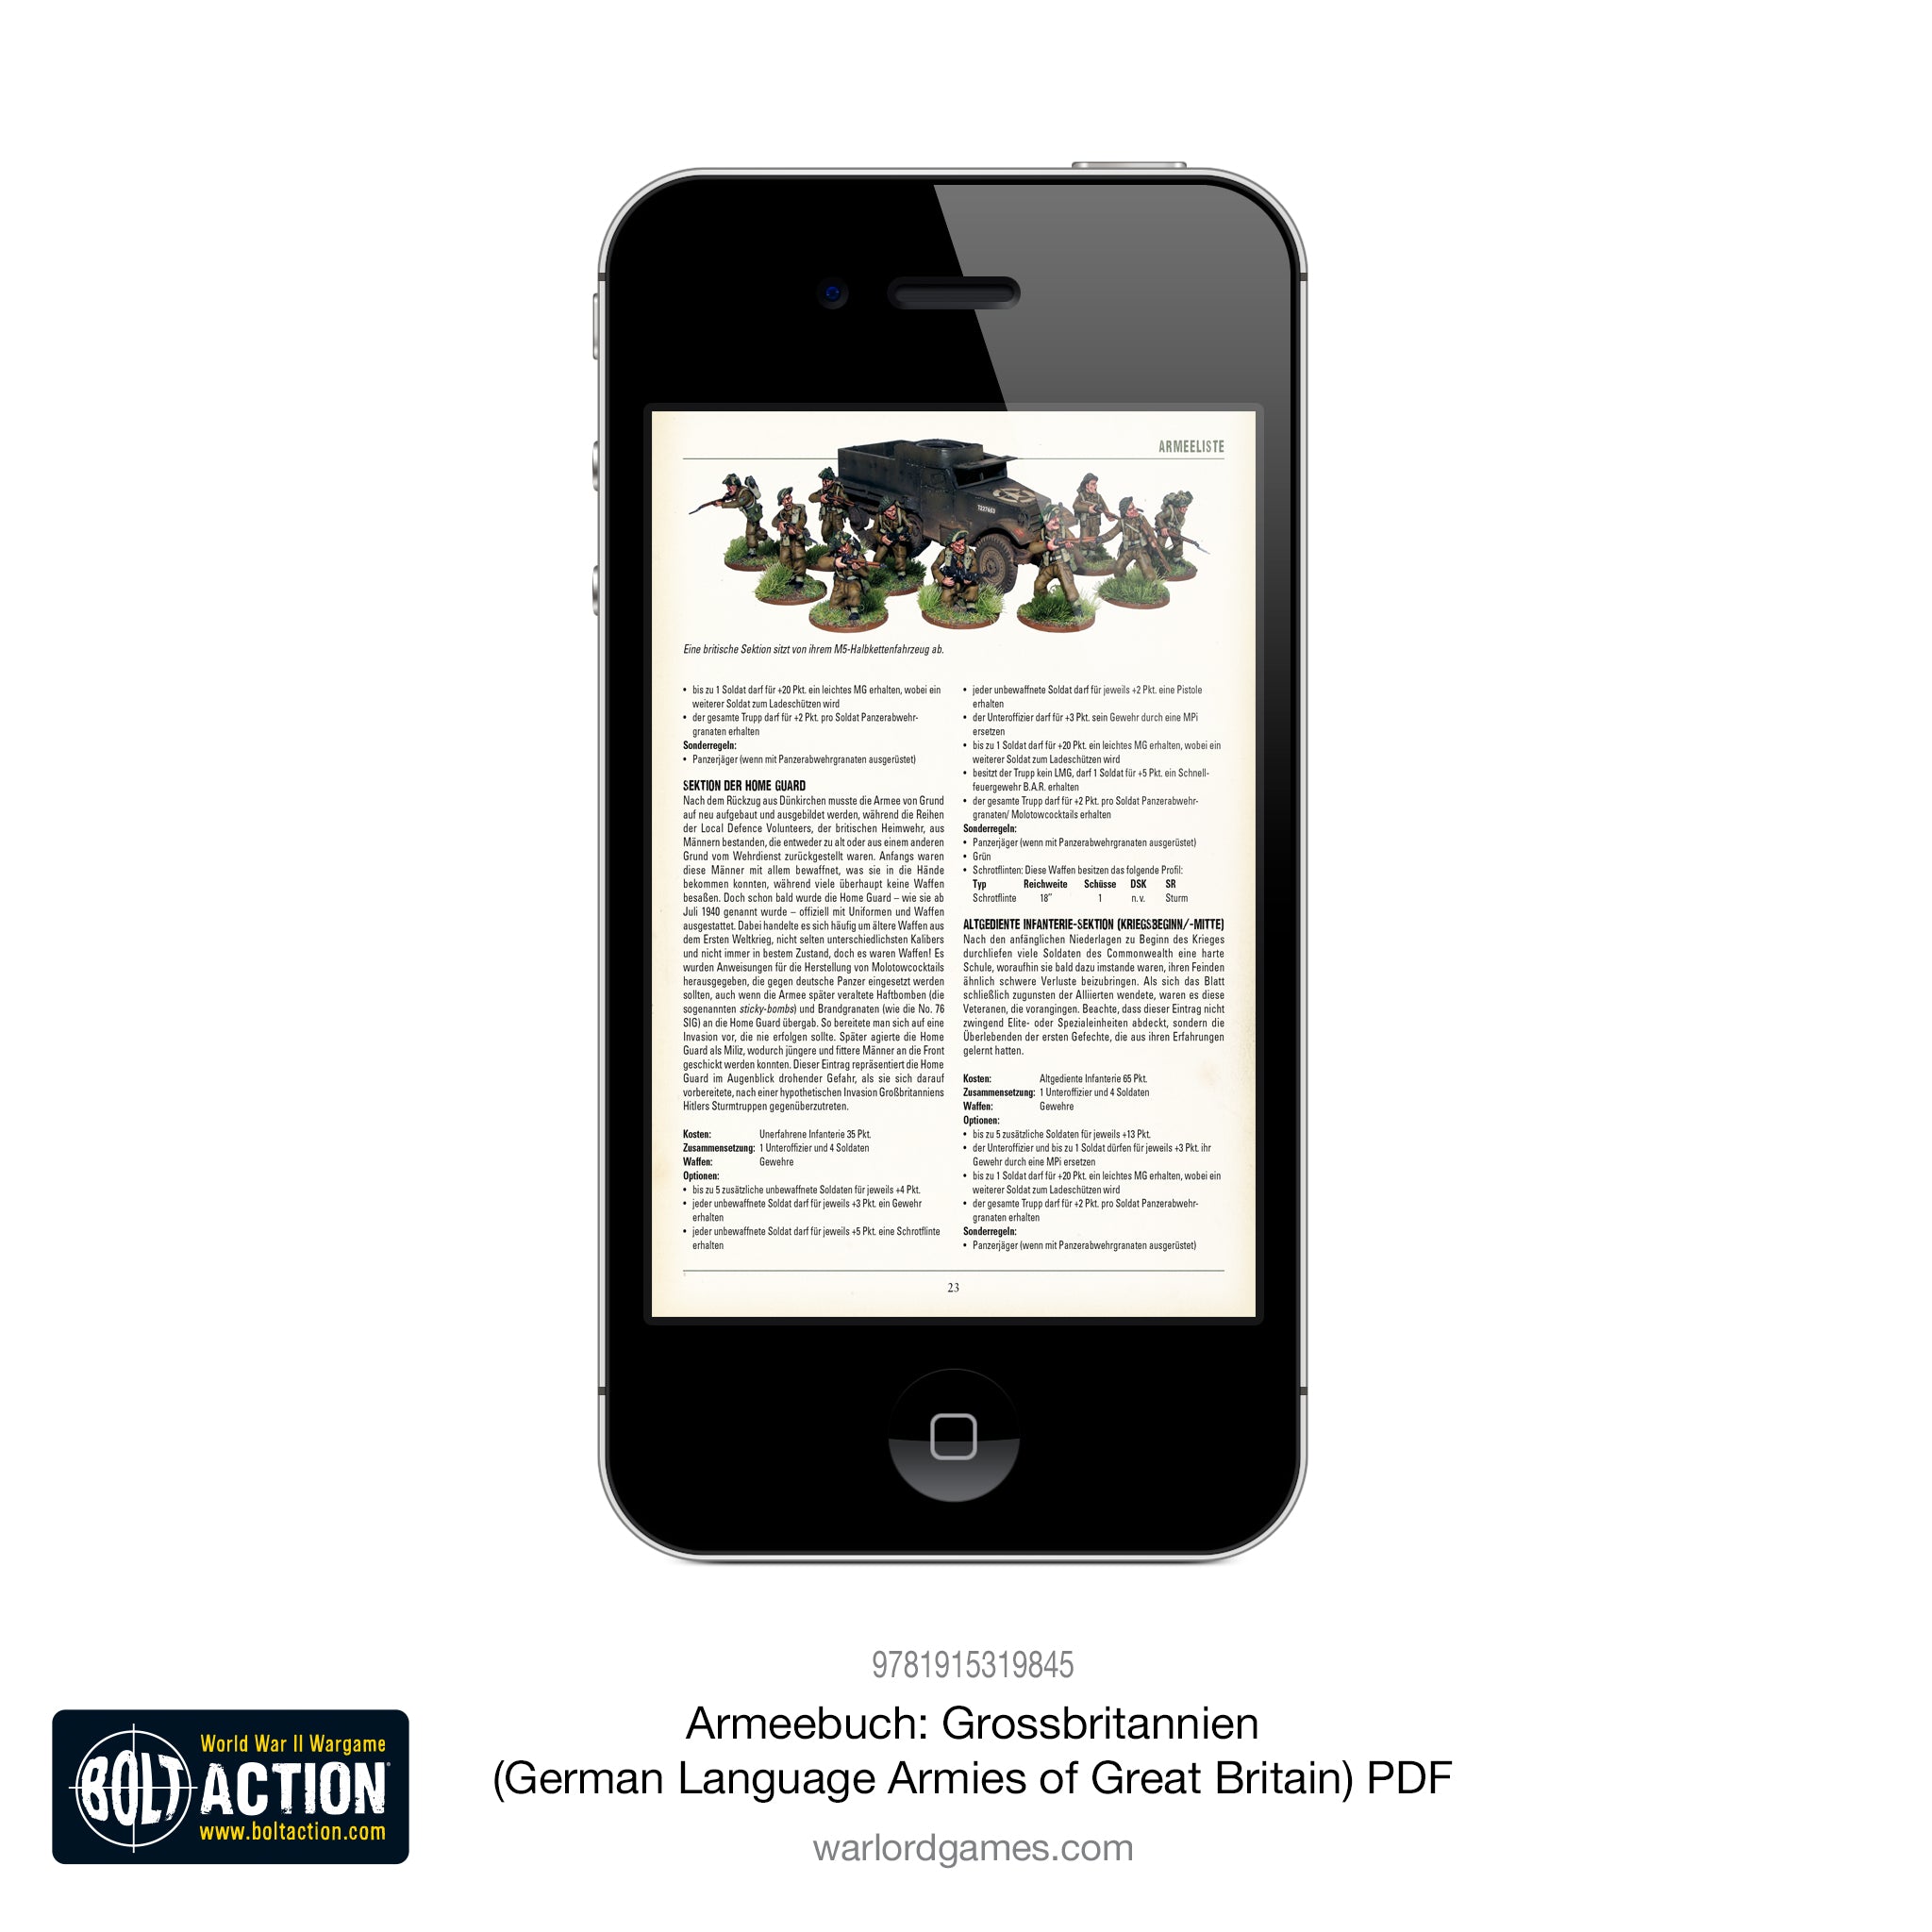 Digital: Armeebuch: Grossbritannien PDF (German Language Armies of Great Britain supplement)